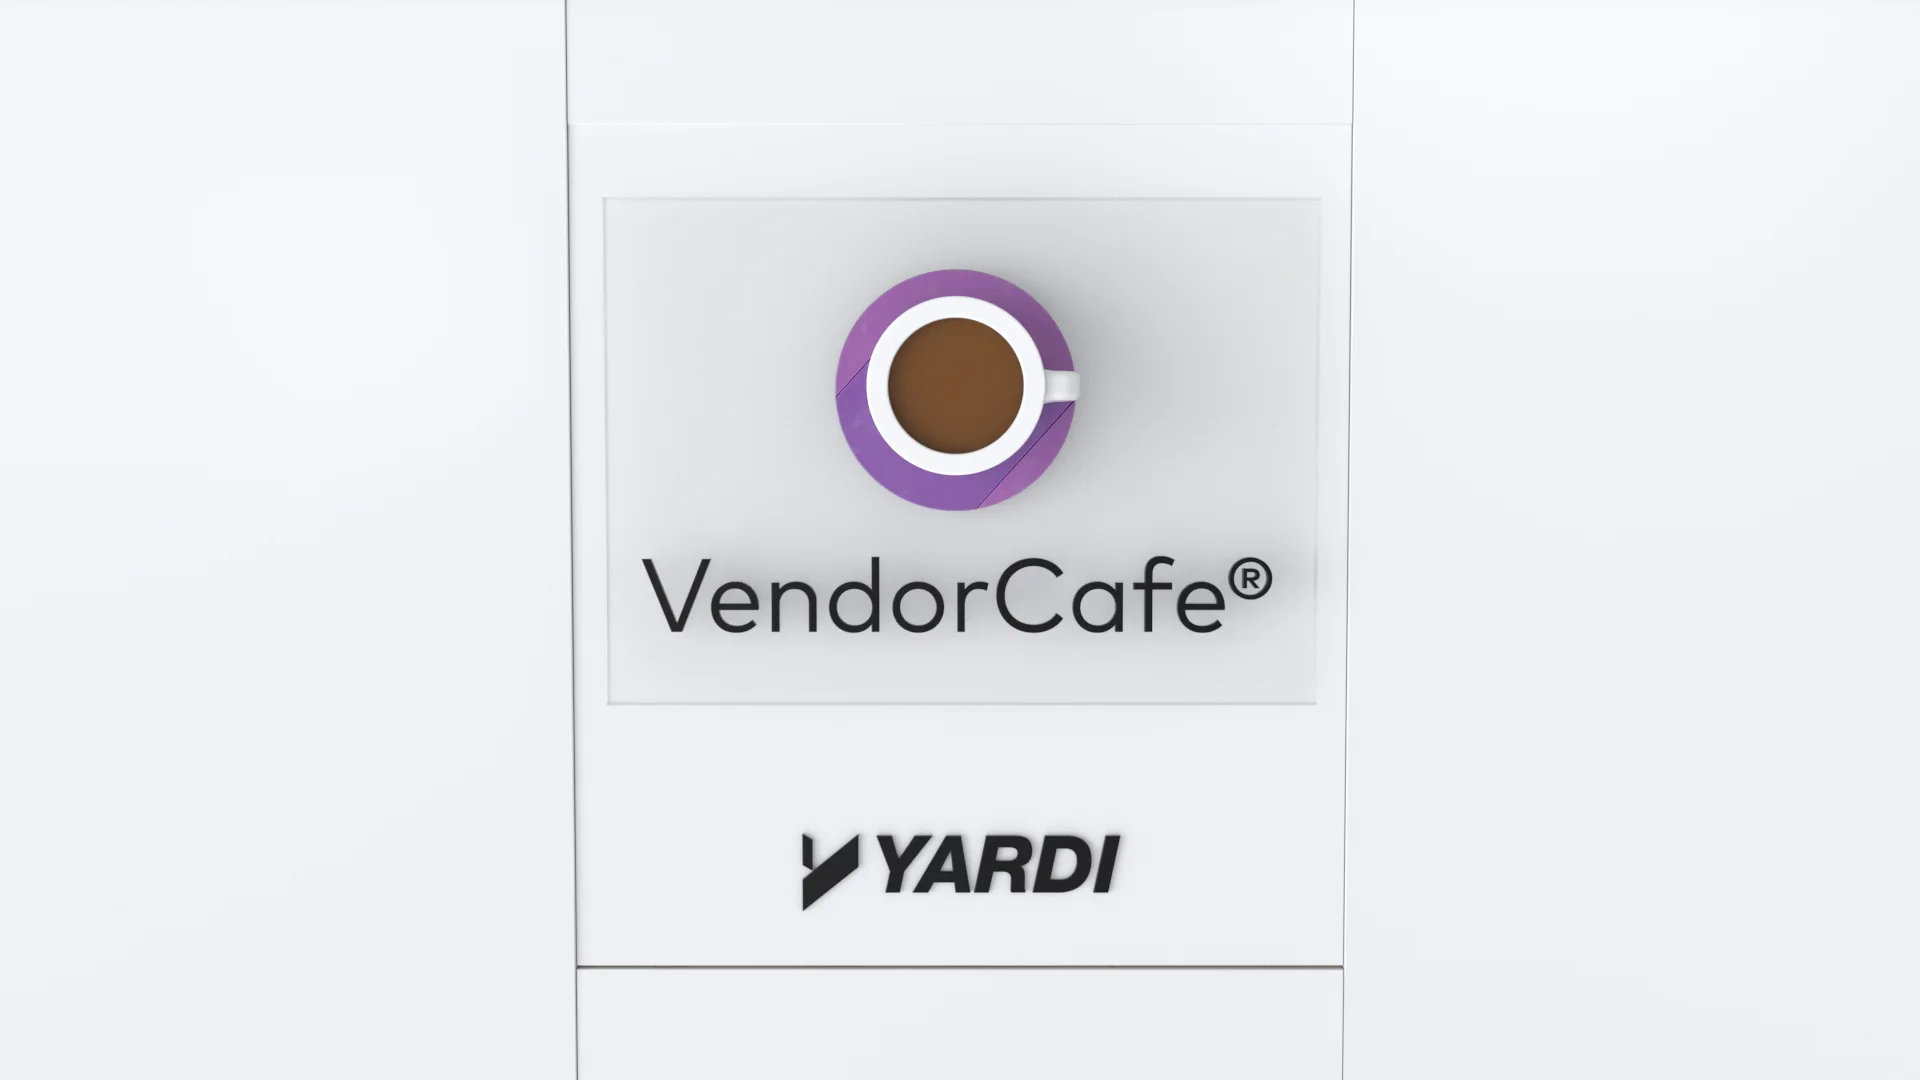 vendorcafe customer service number